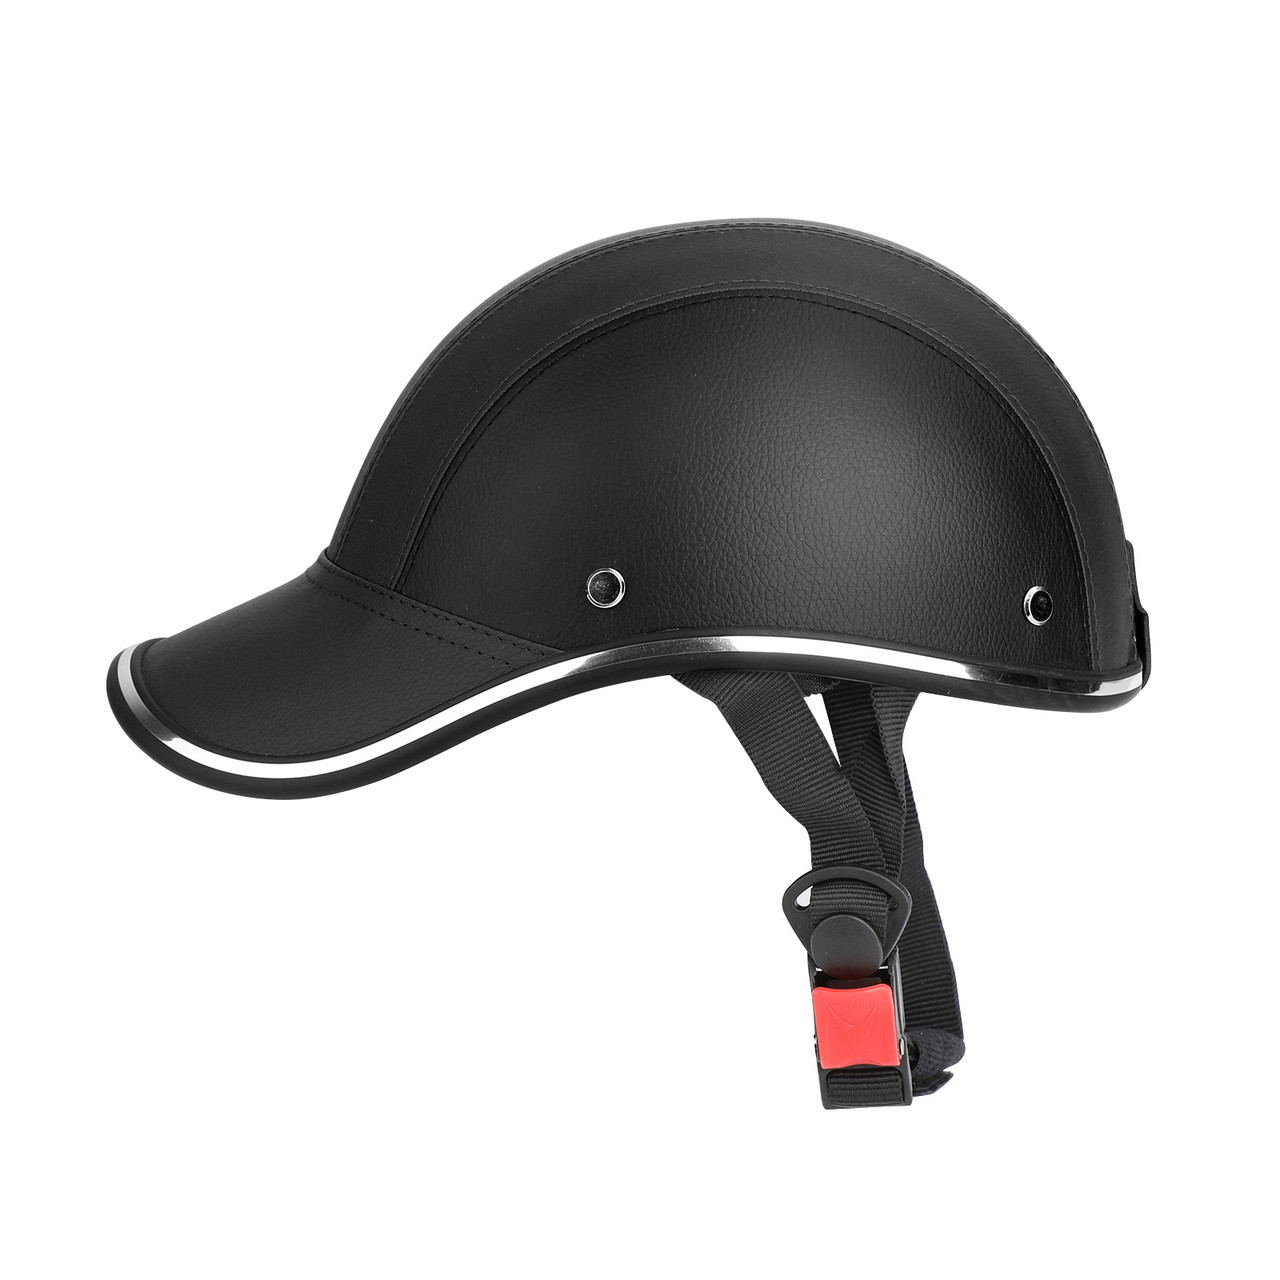 Unisex Bicycle Helmet MTB Road Cycling Mountain Bike Sports Safety Helmet Black